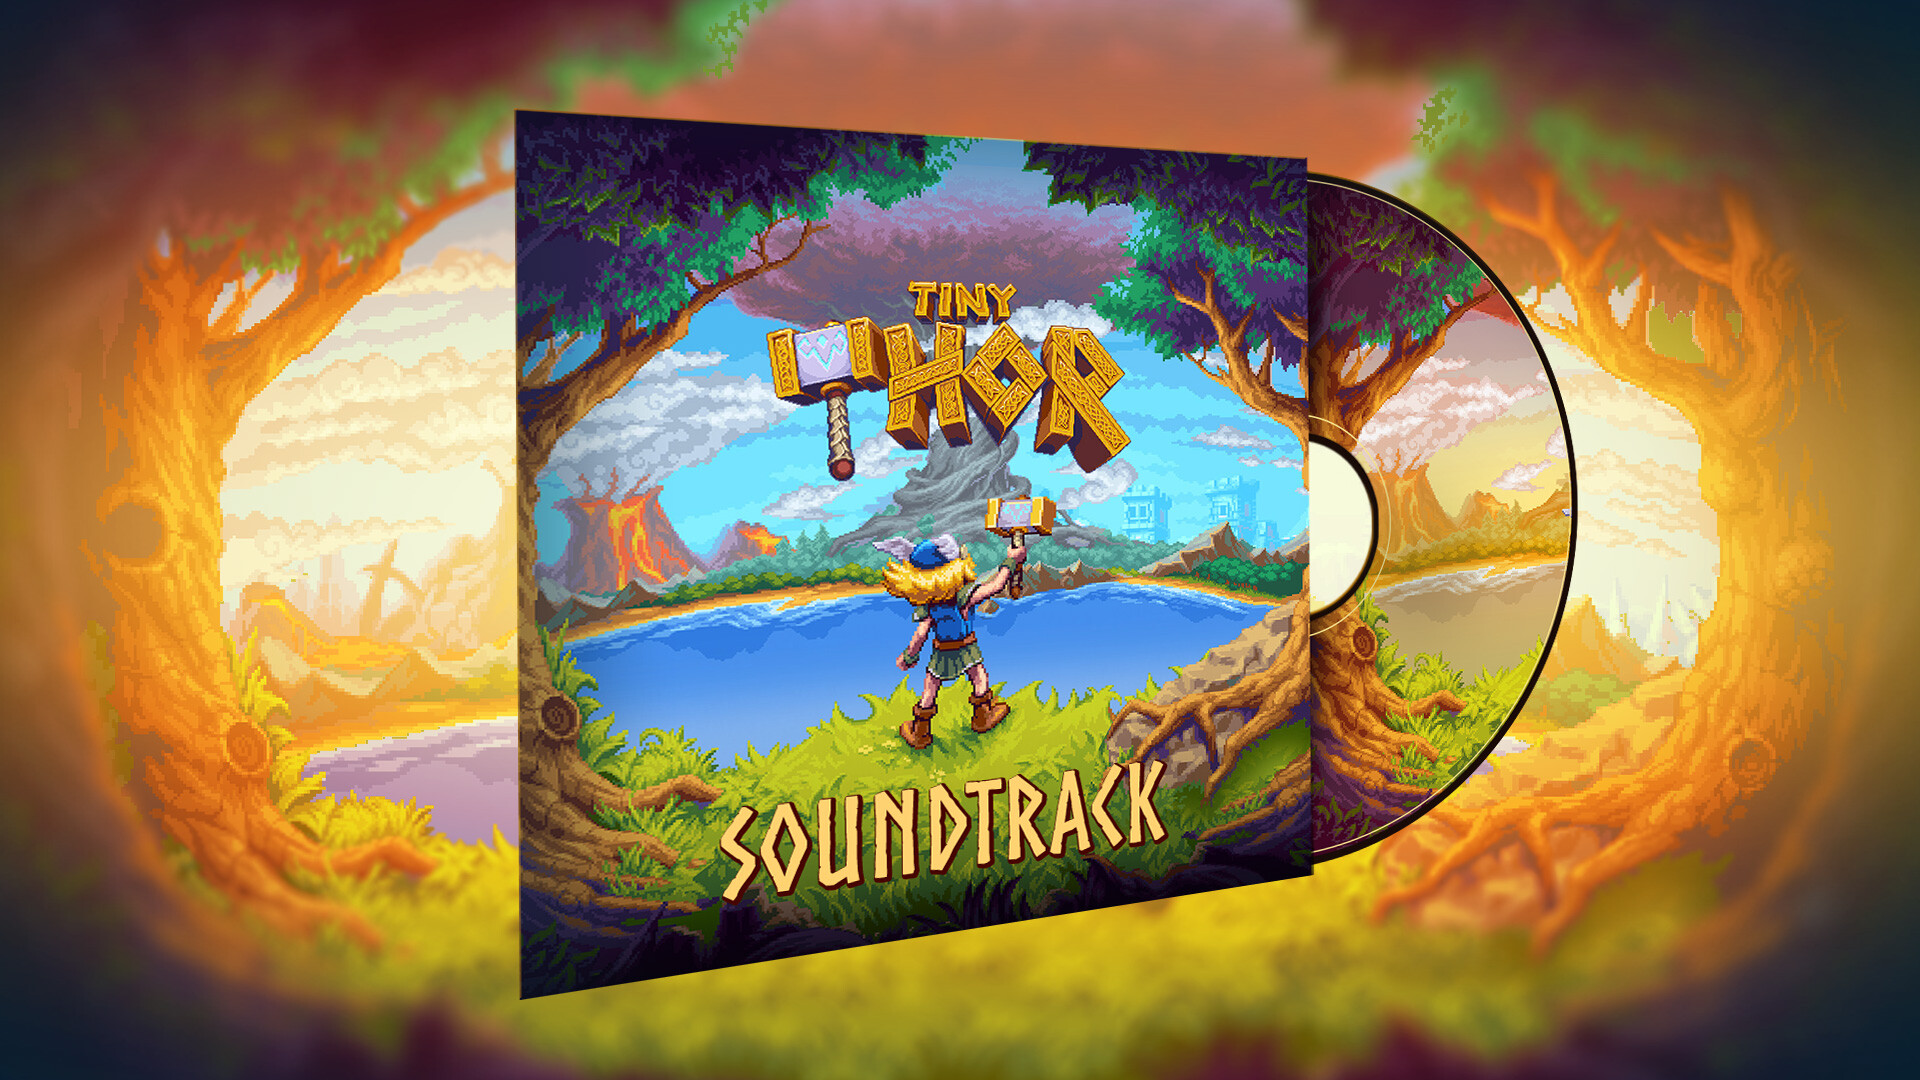 Tiny Thor Soundtrack Featured Screenshot #1